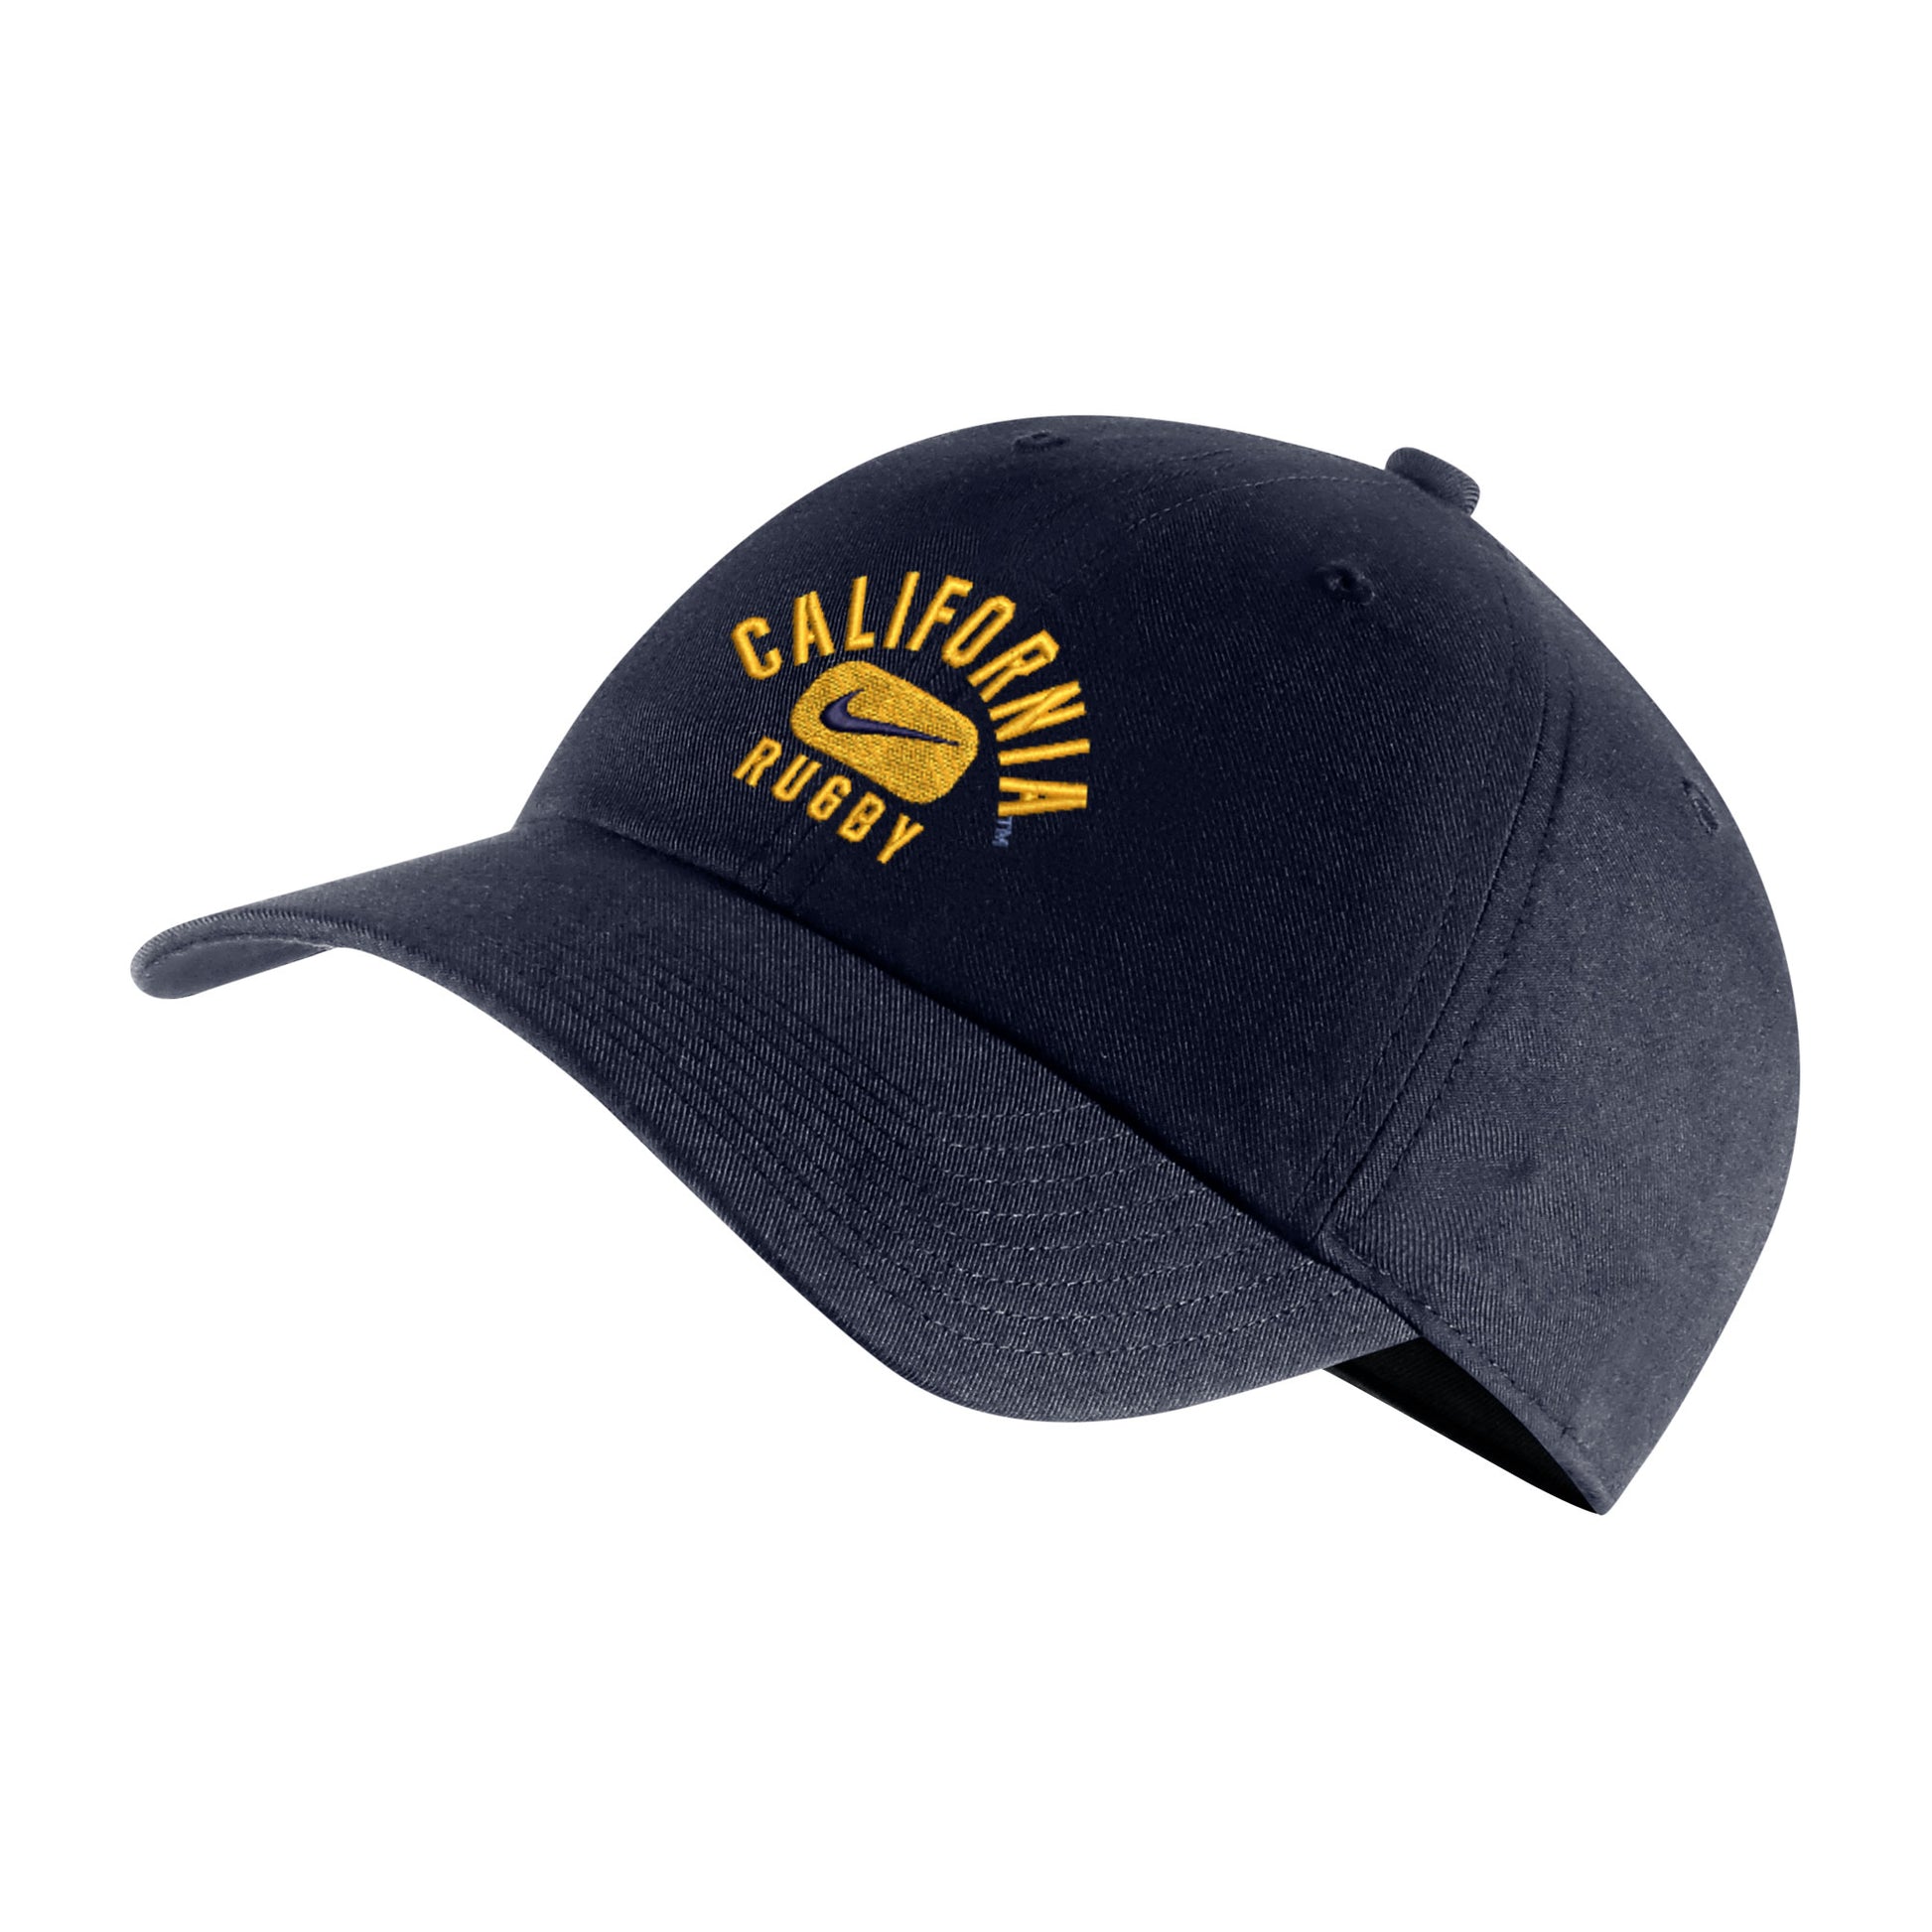 U.C. Berkeley Cal Berkeley Rugby & Nike swoosh campus hat-Navy-Shop College Wear